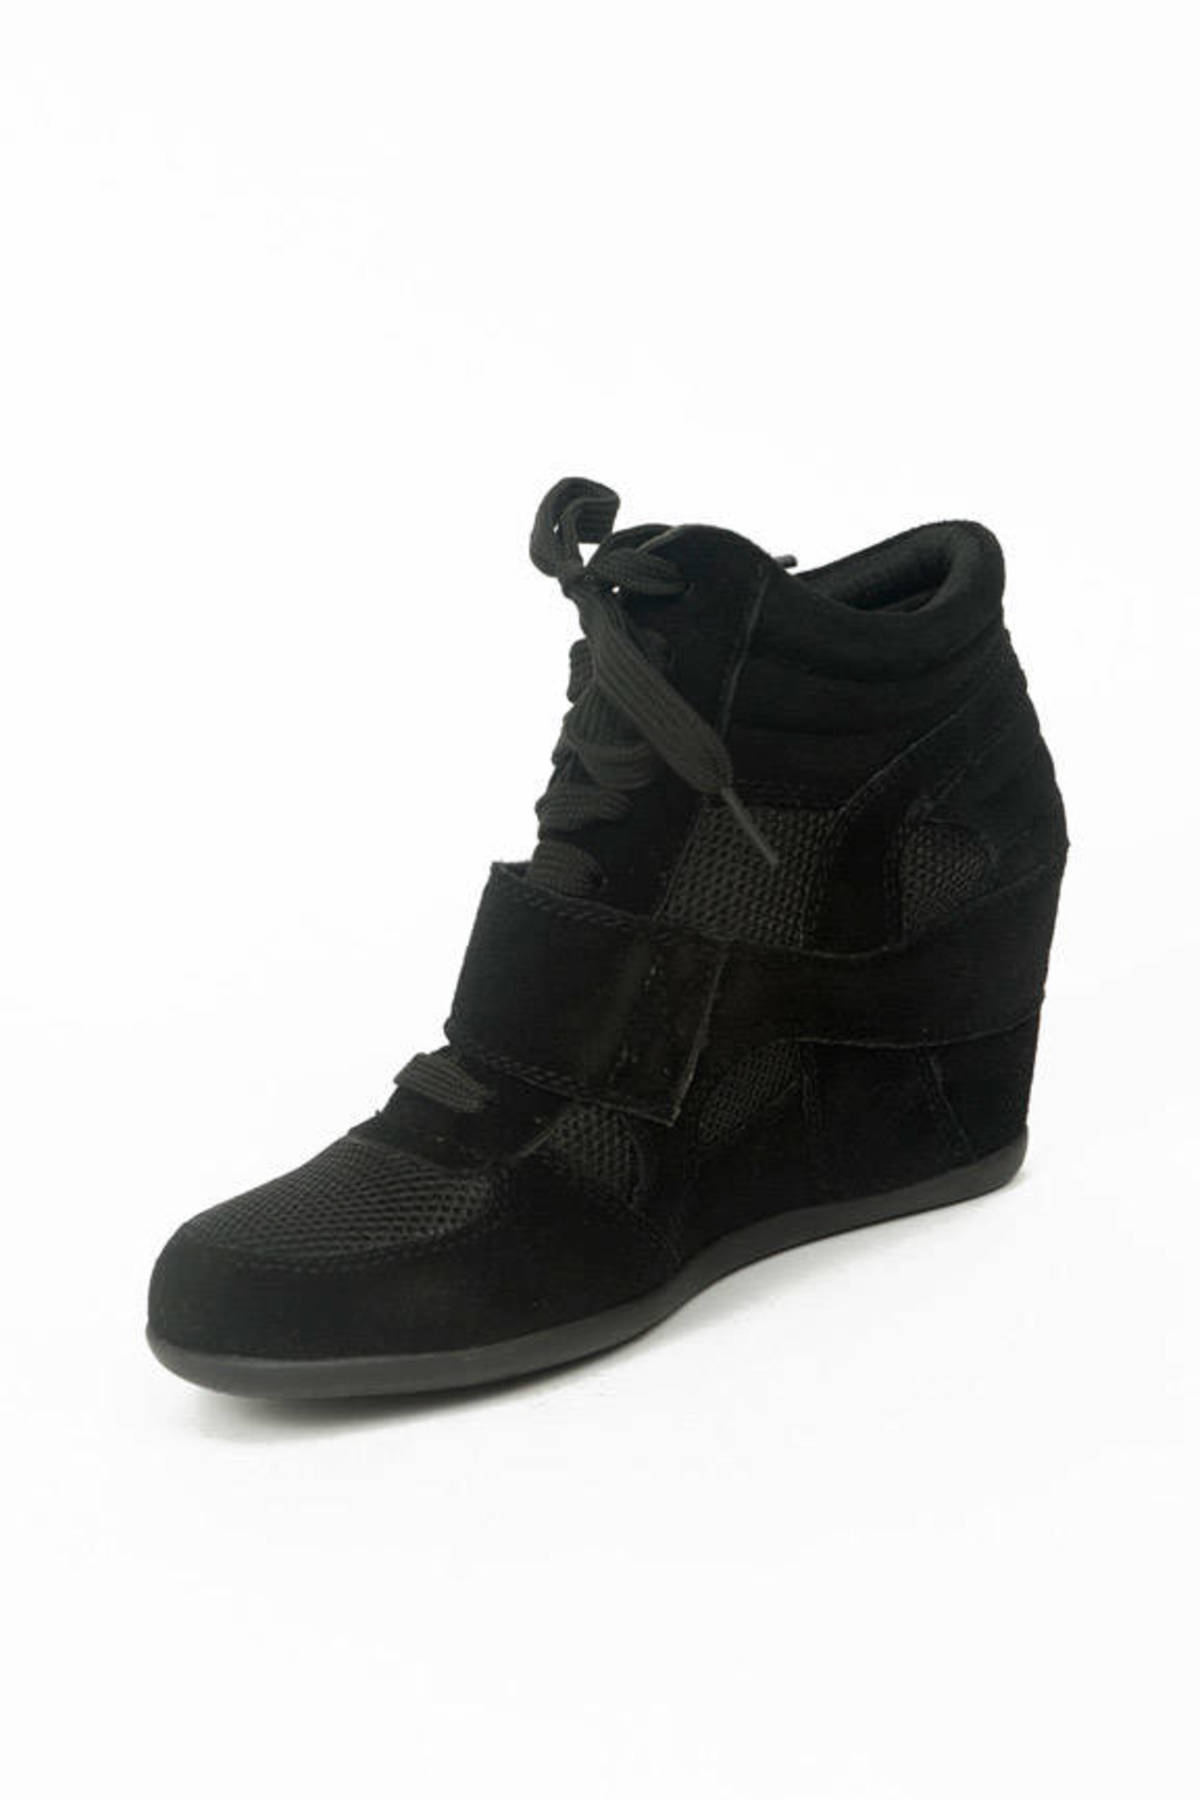 Dakota Sneaker Wedges in Black - $64 | Tobi US